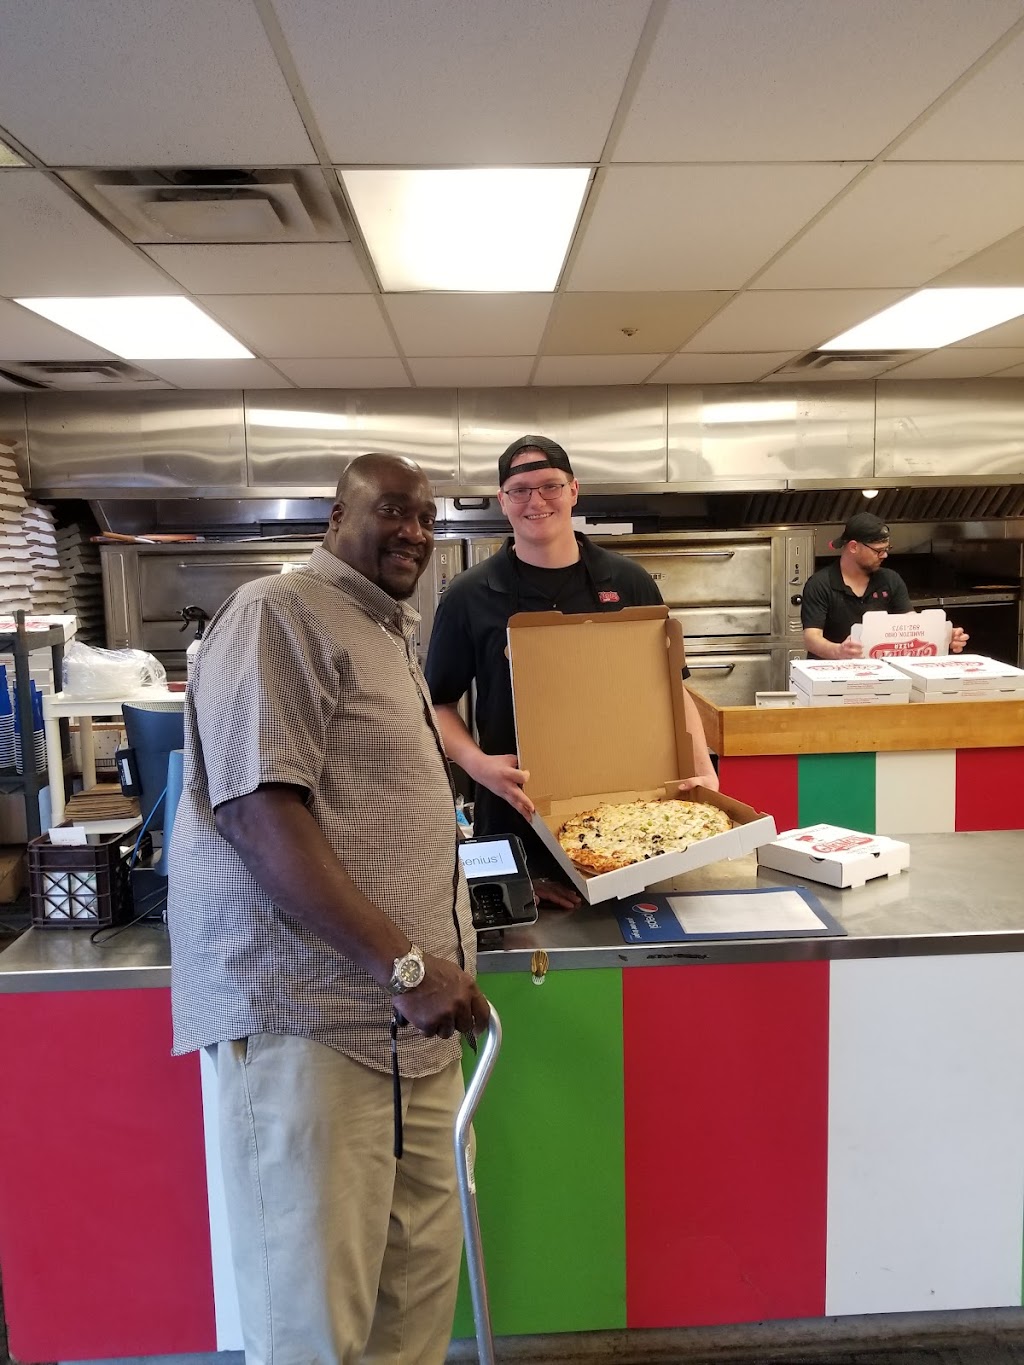 Chesters Pizzeria Inc. | 2929 Dixie Hwy, Hamilton, OH 45015 | Phone: (513) 892-1973